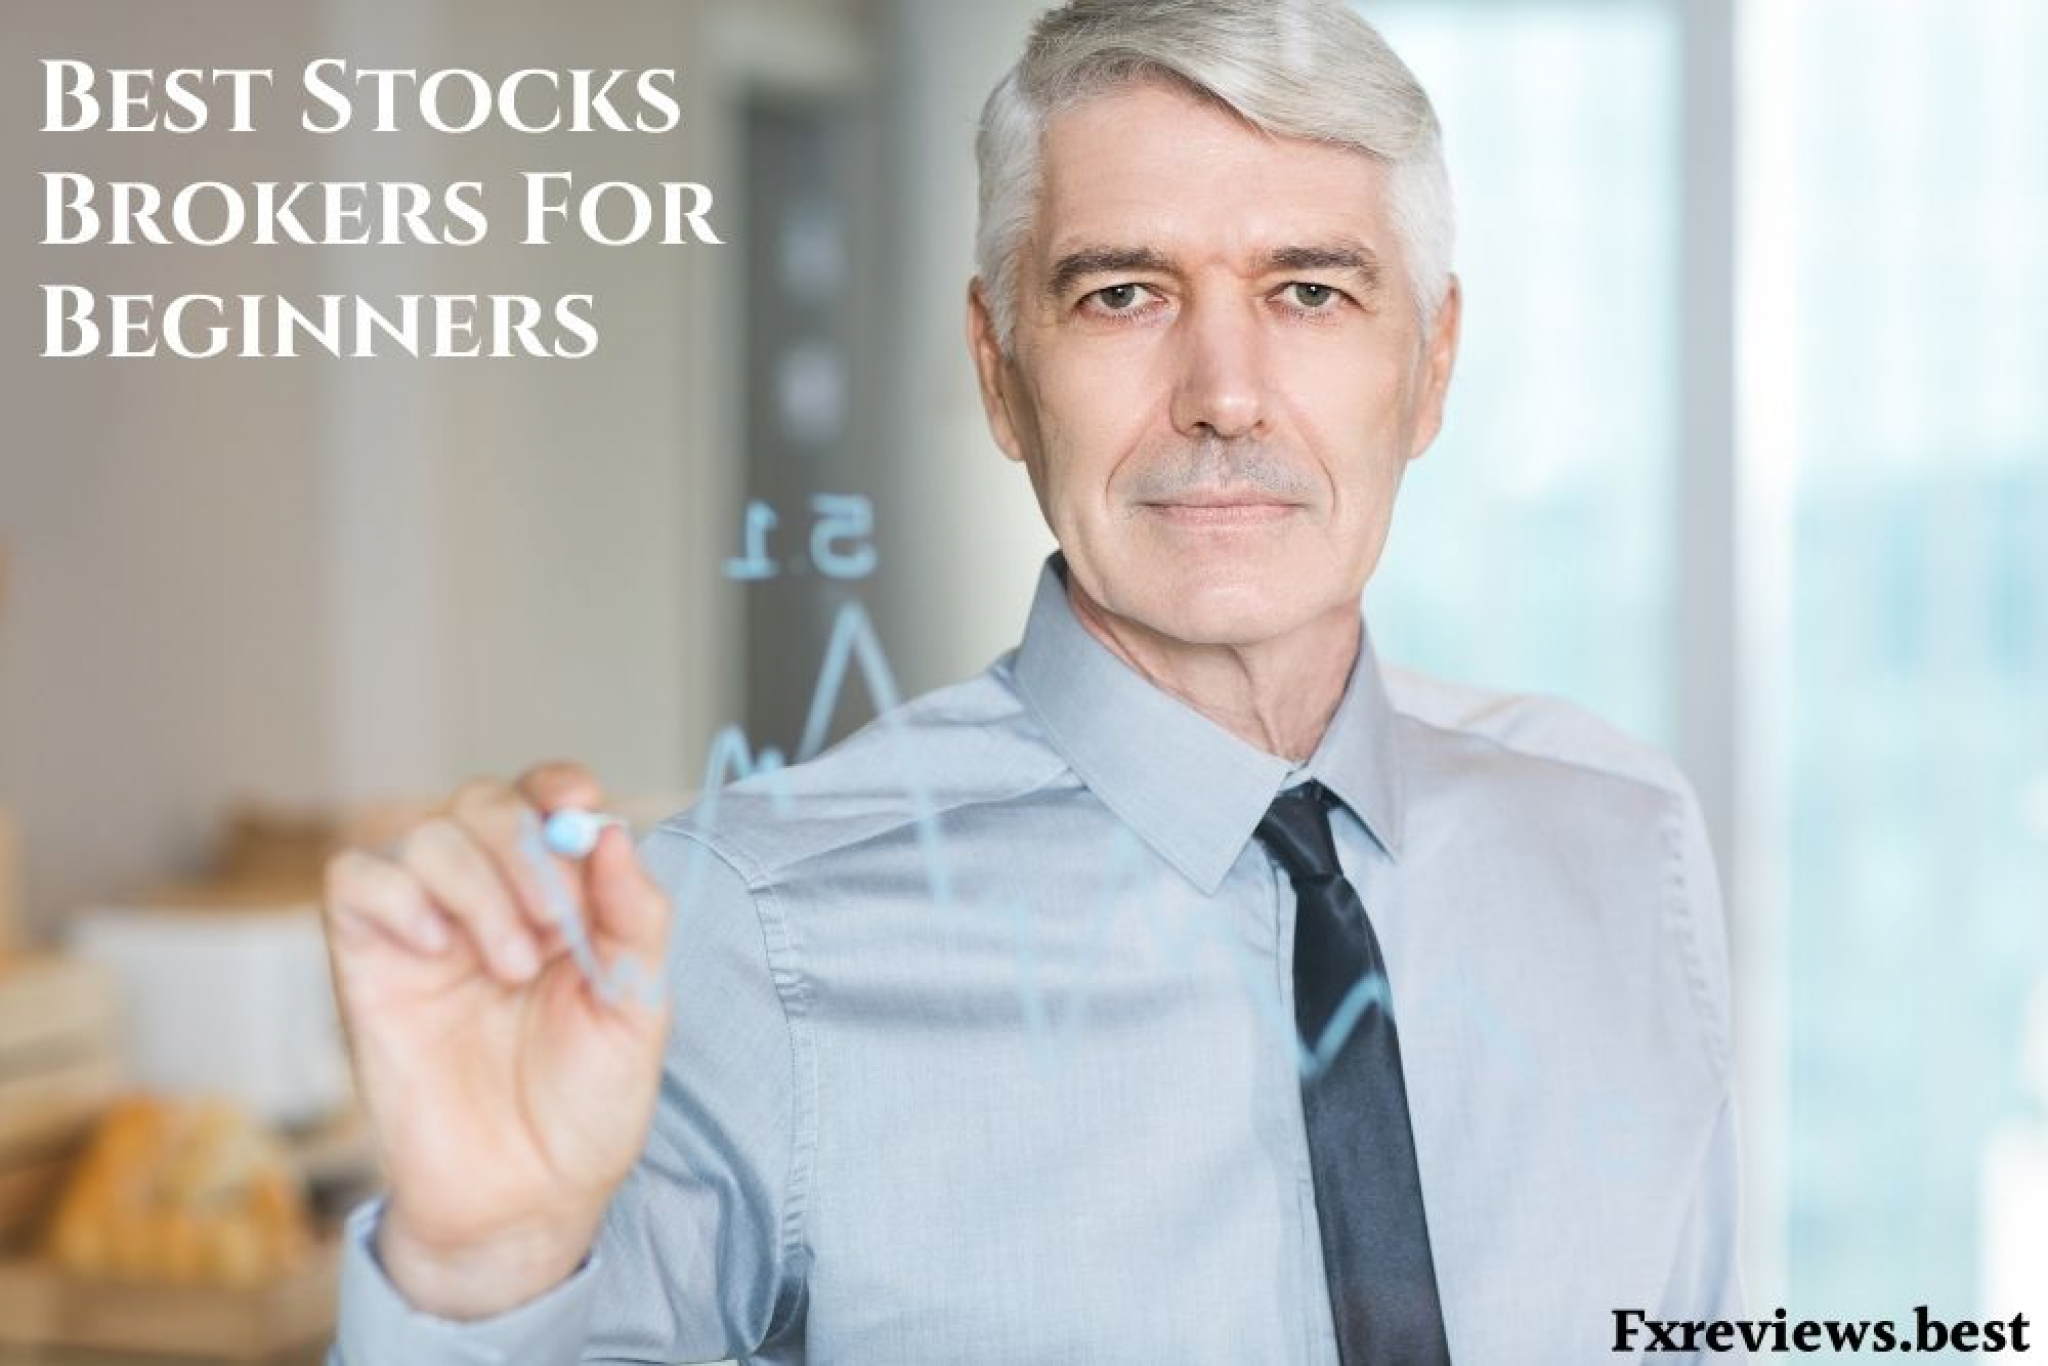 Top 10 Stock Brokers For Beginners - Fxreviews.best